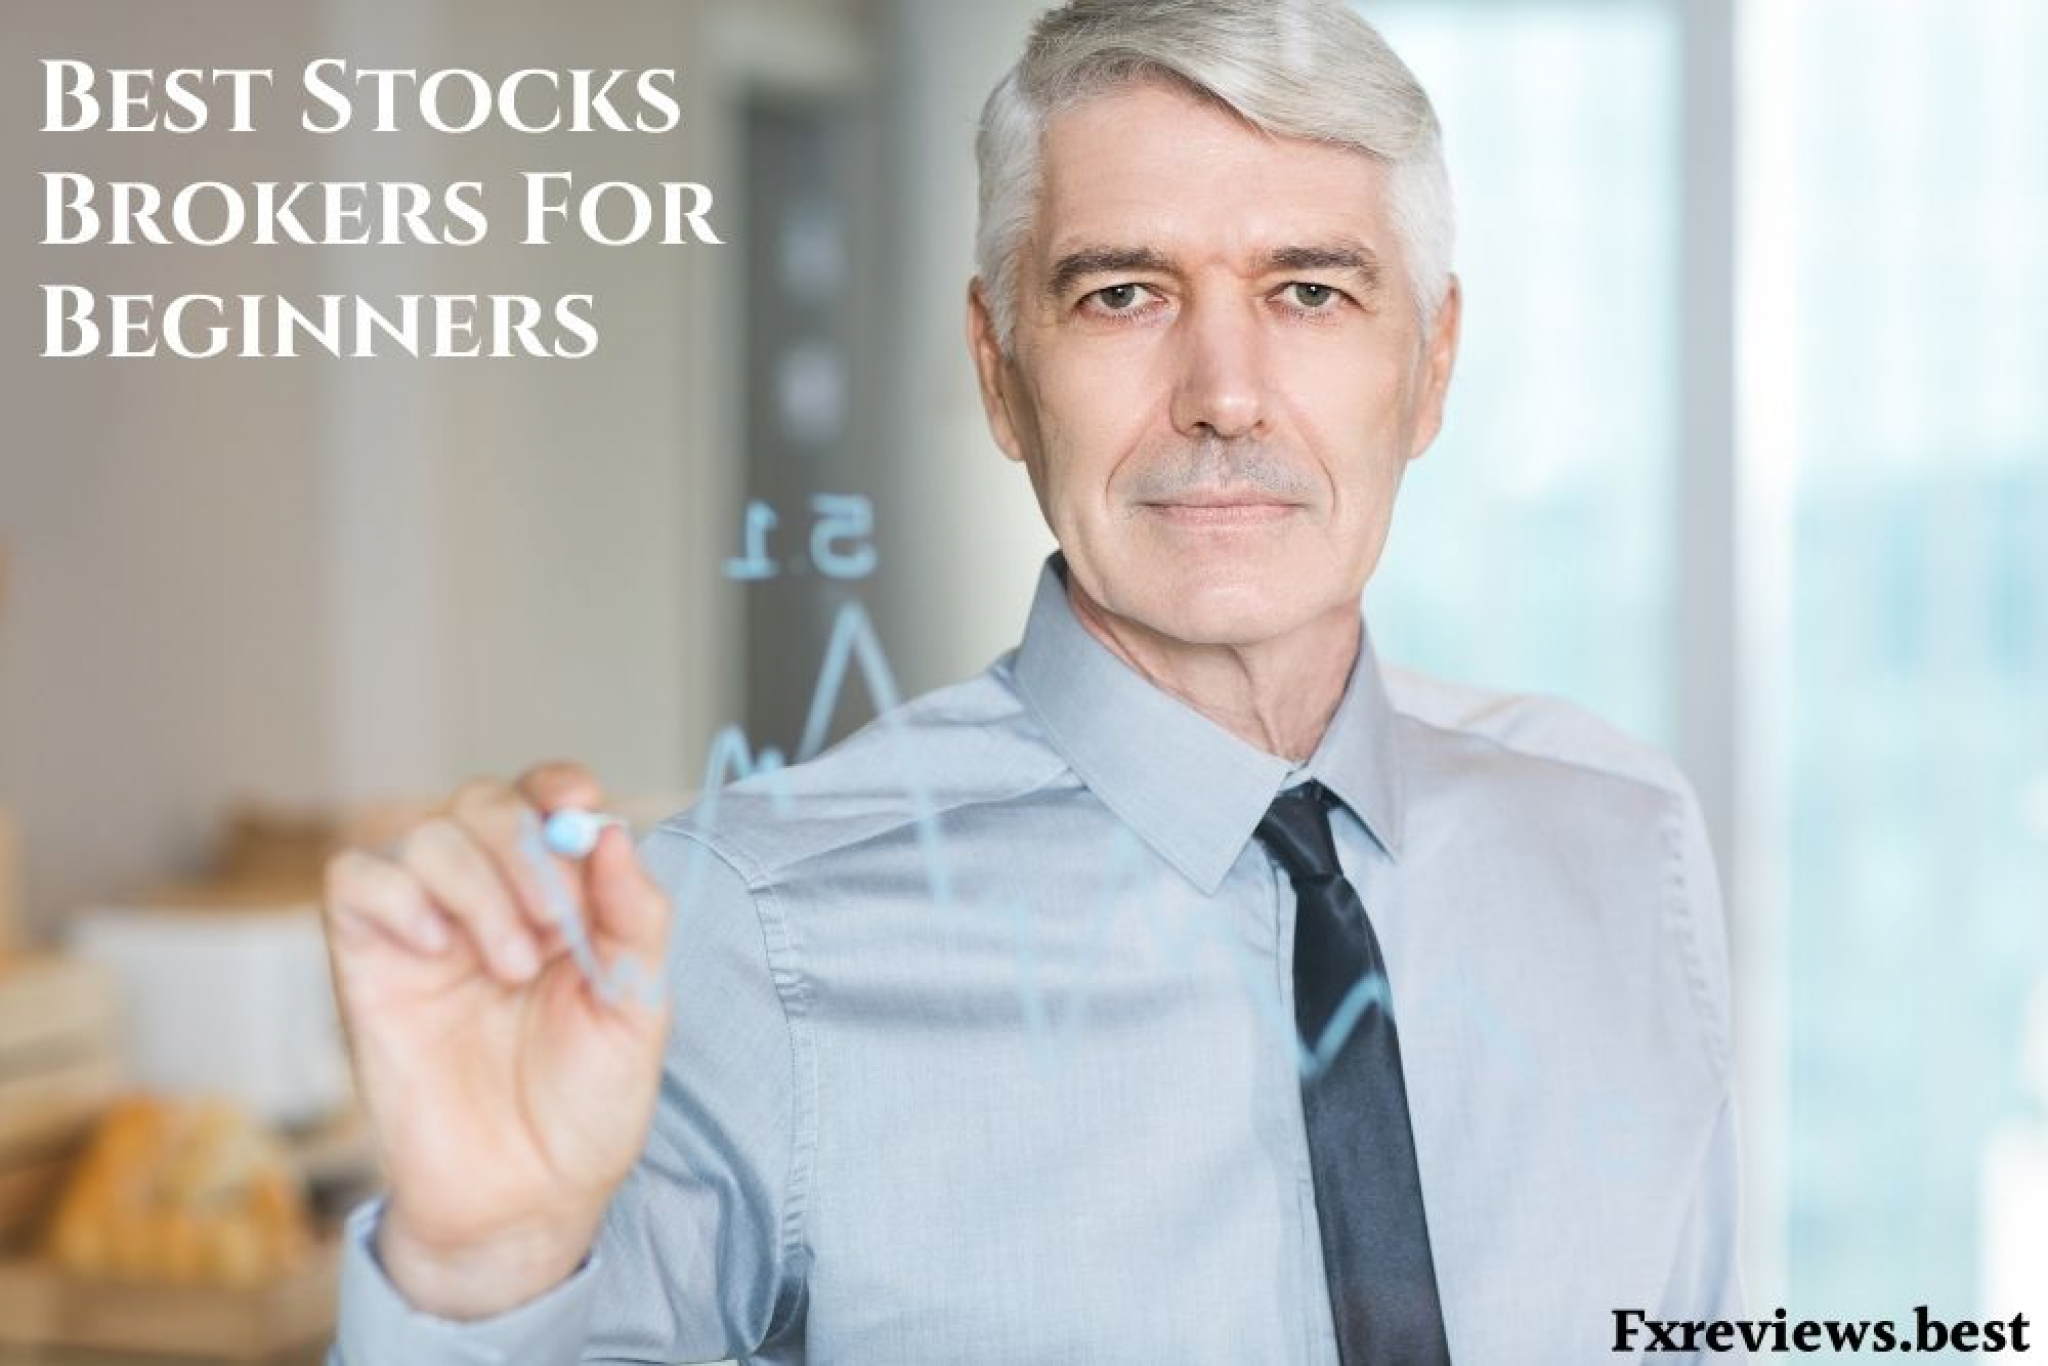 Top 10 Stock Brokers For Beginners - Fxreviews.best